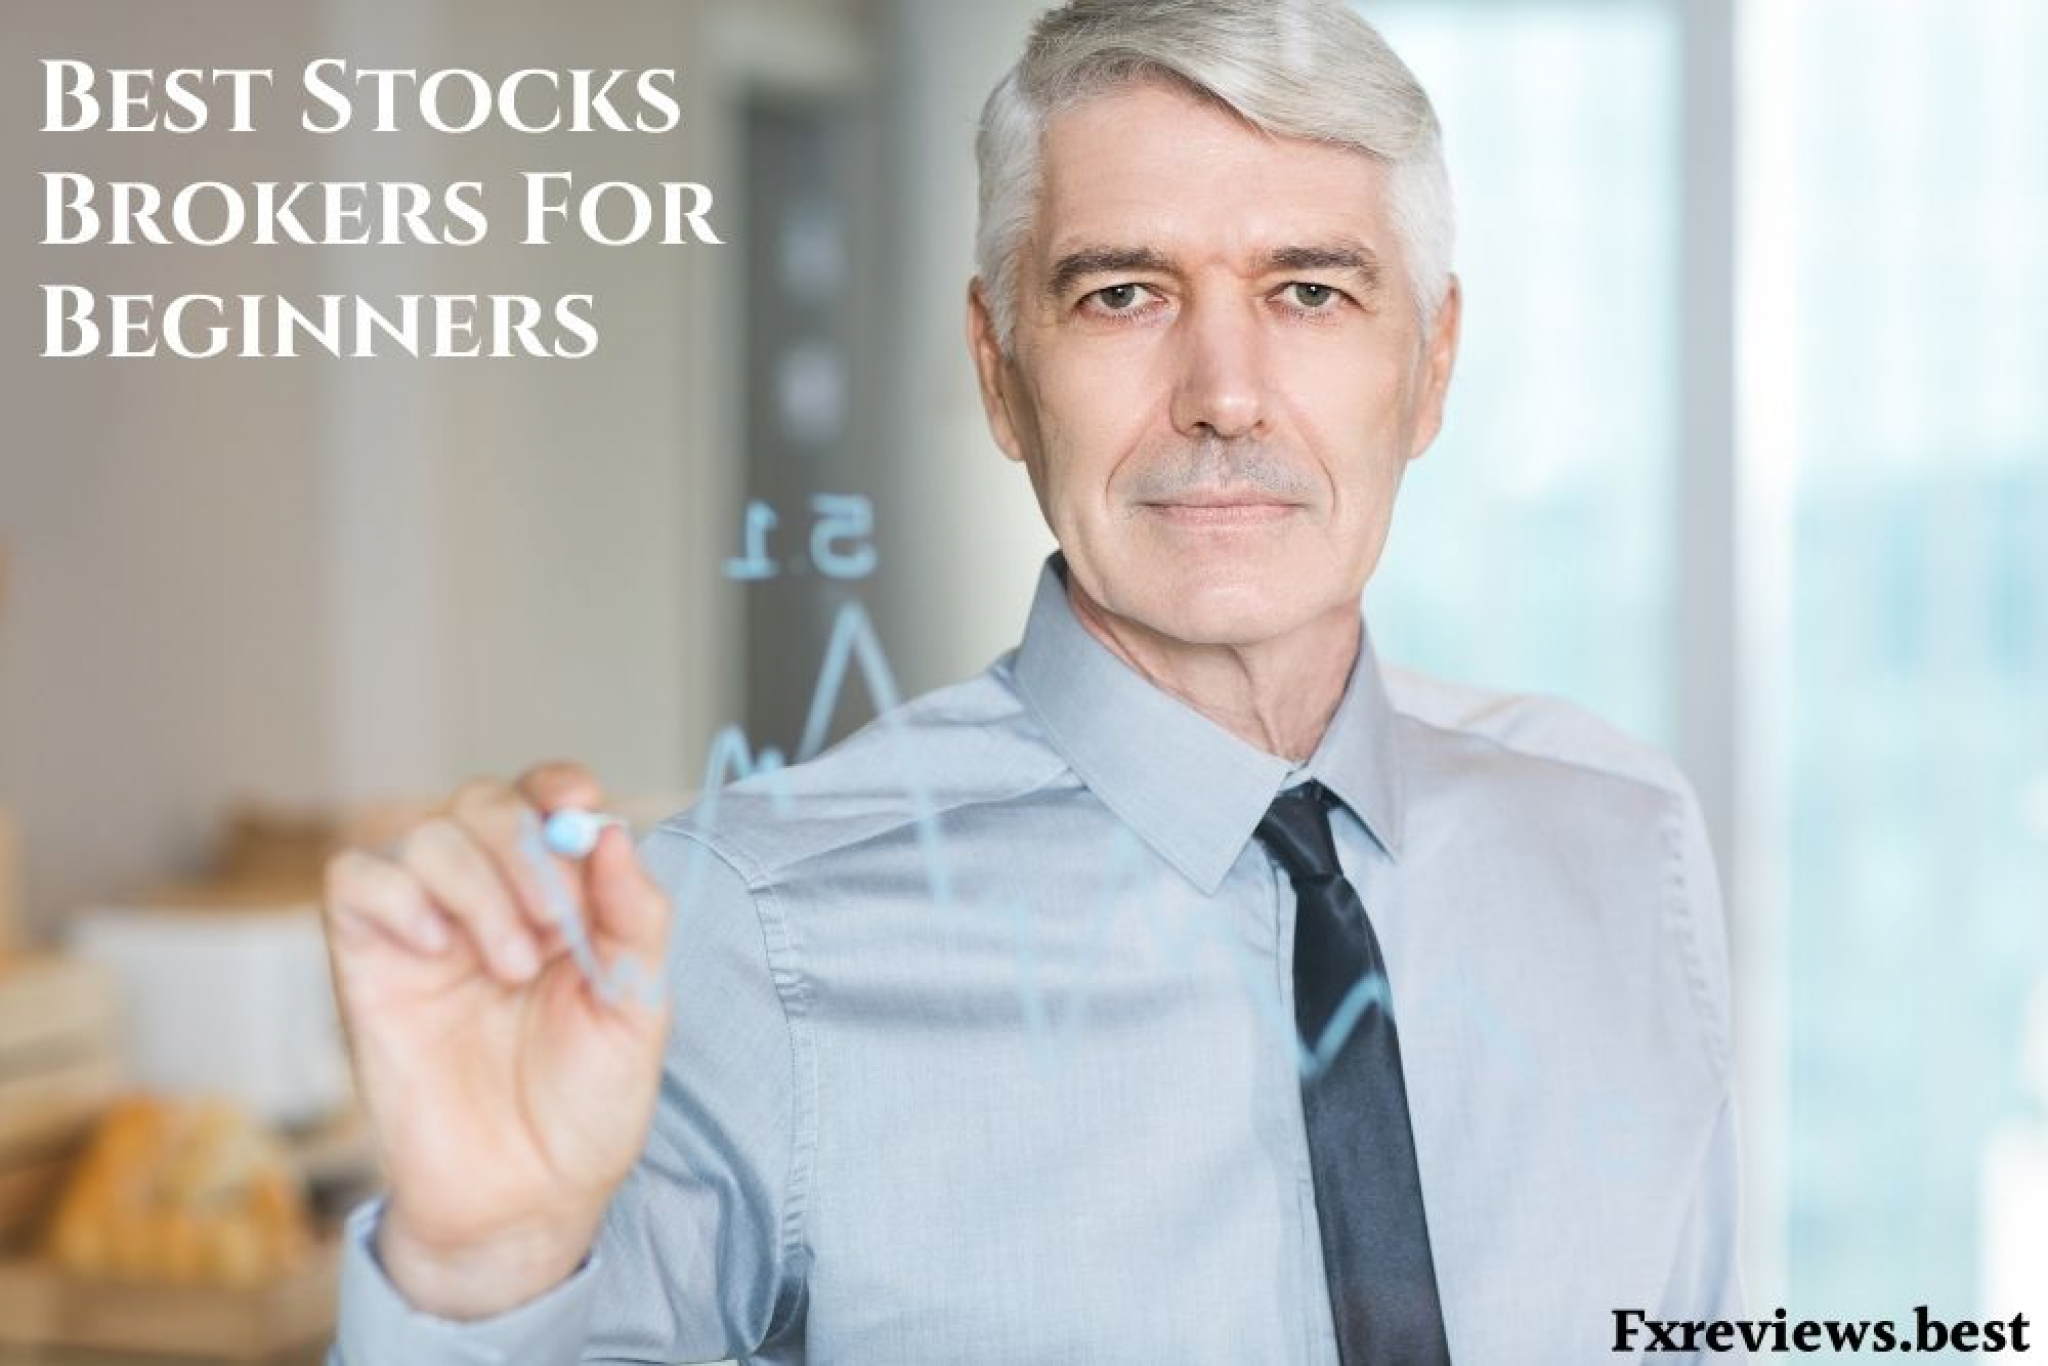 Top 10 Stock Brokers For Beginners - Fxreviews.best